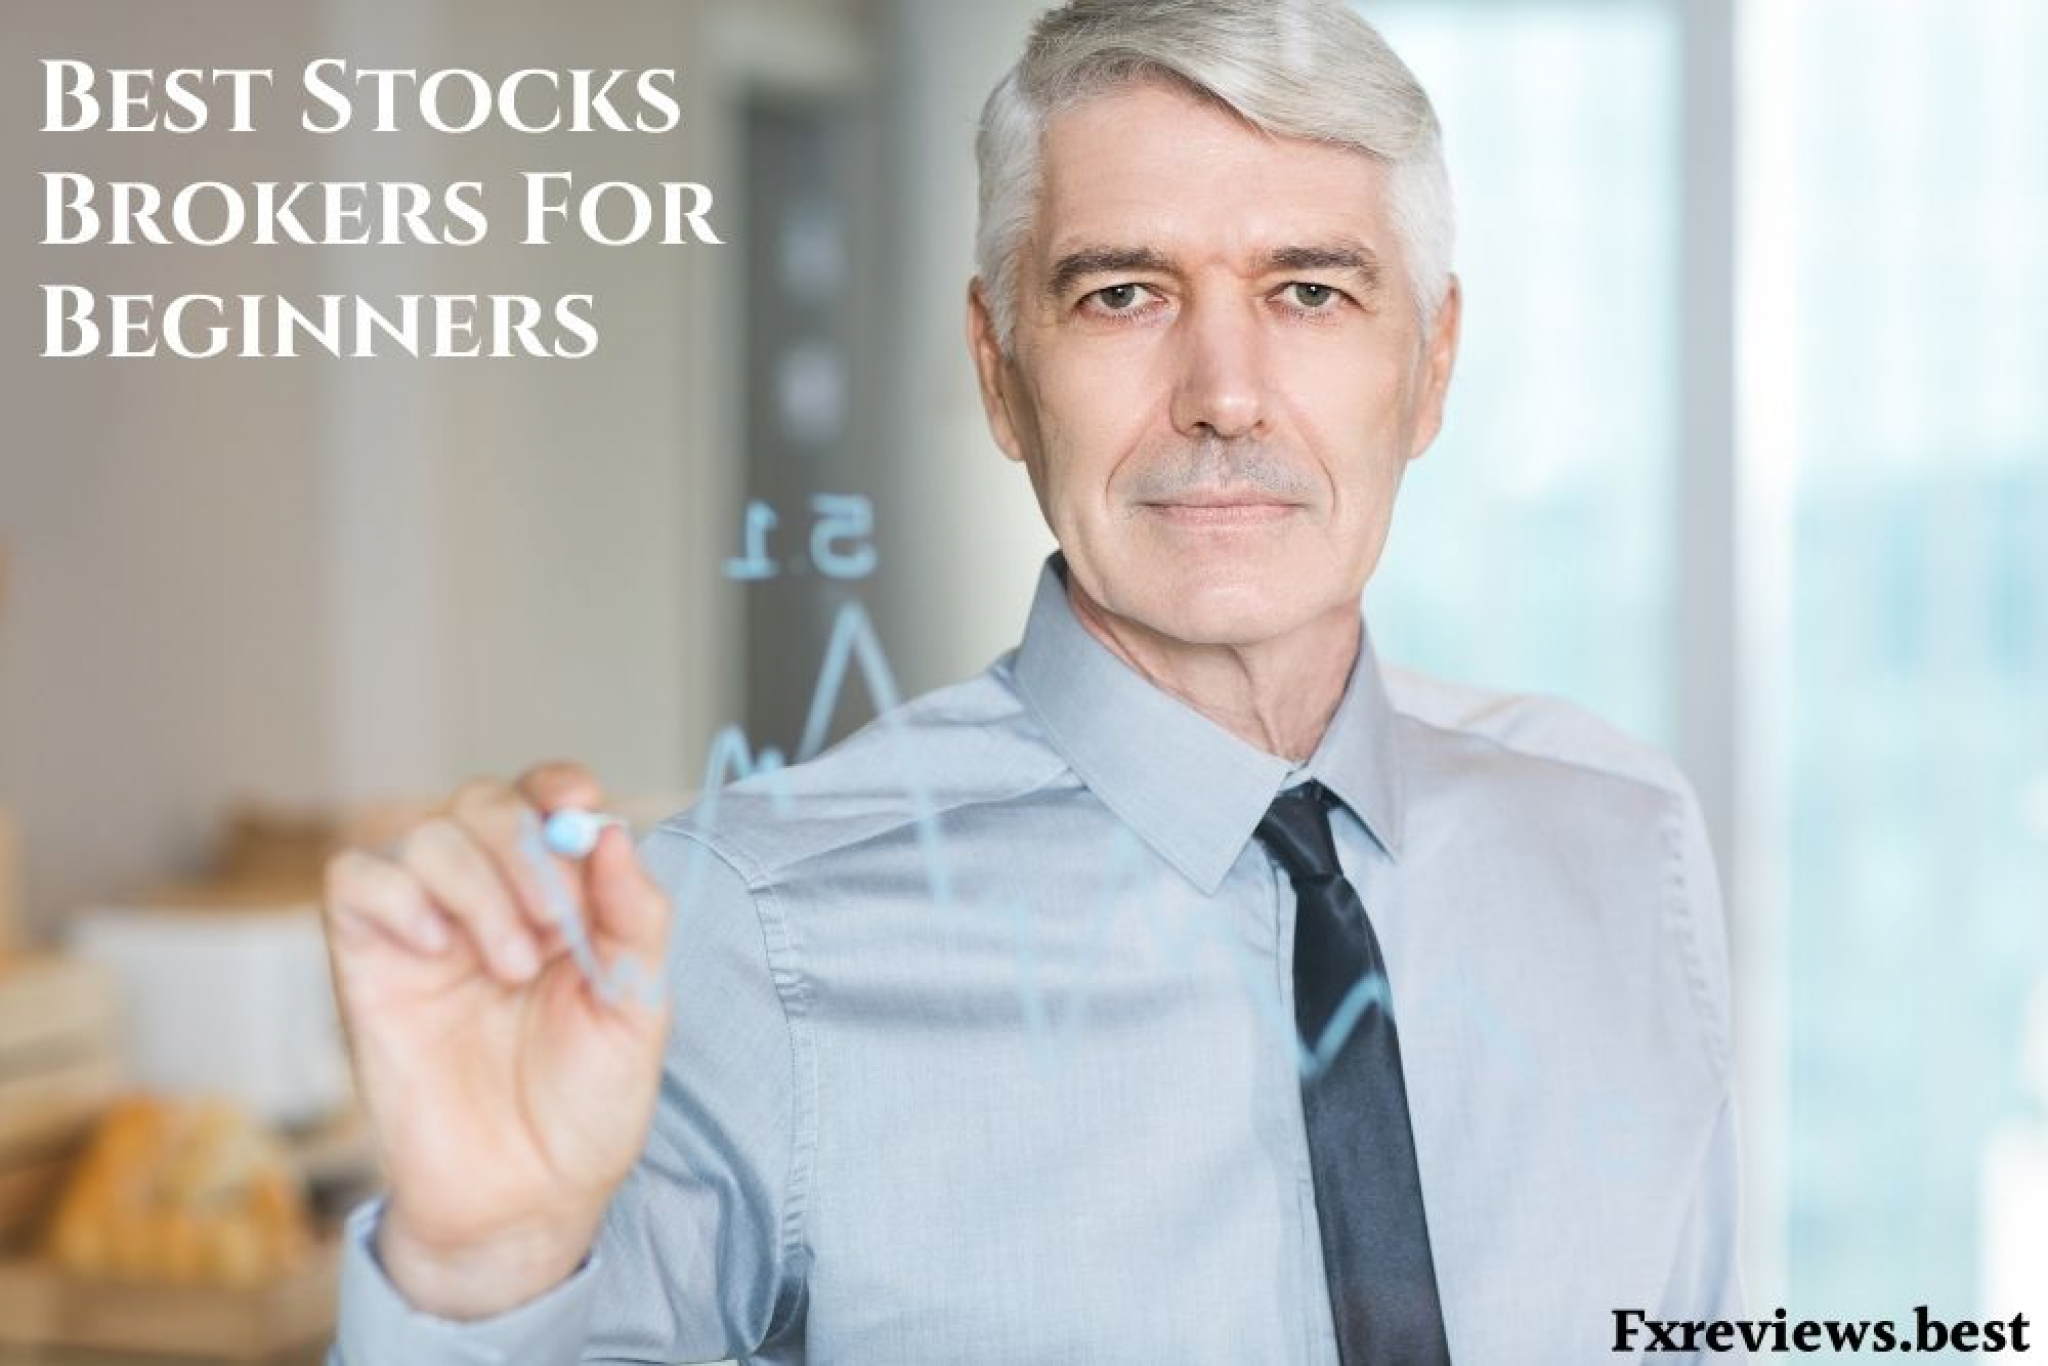 Top 10 Stock Brokers For Beginners - Fxreviews.best